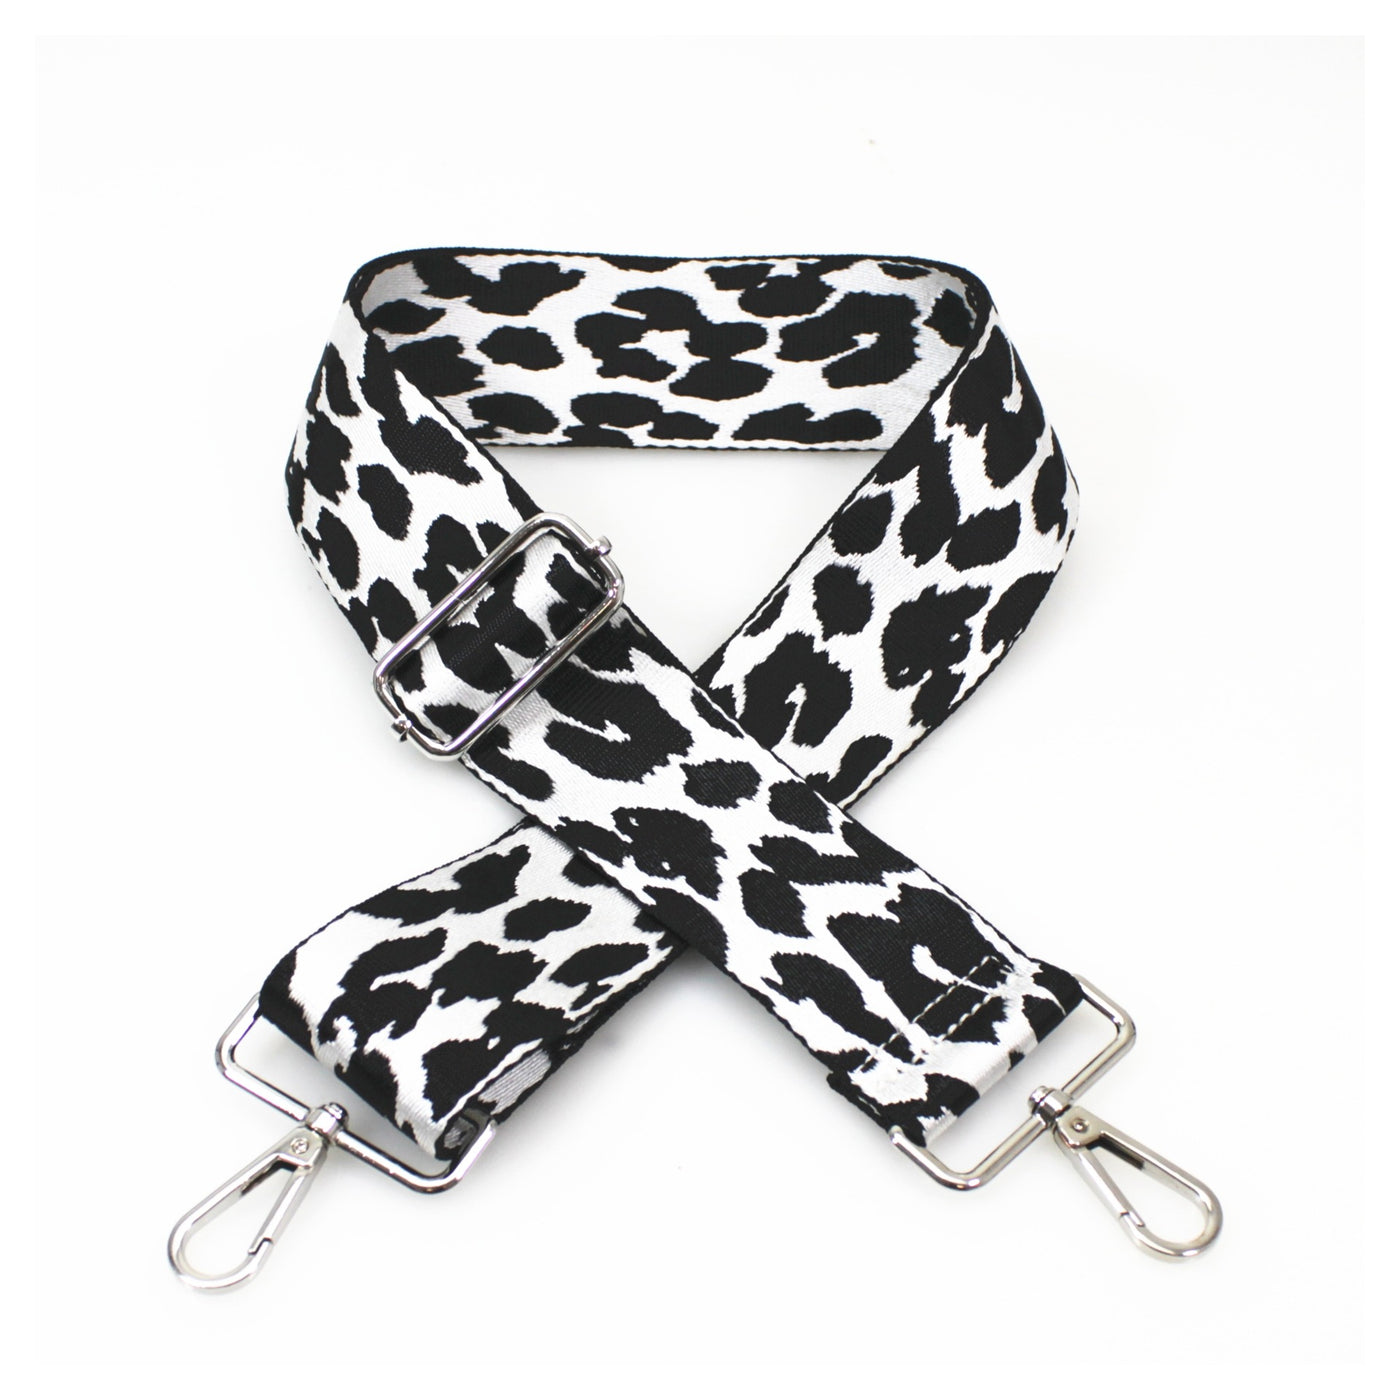 White & Black Leopard Print Bag Strap - Silver Fittings